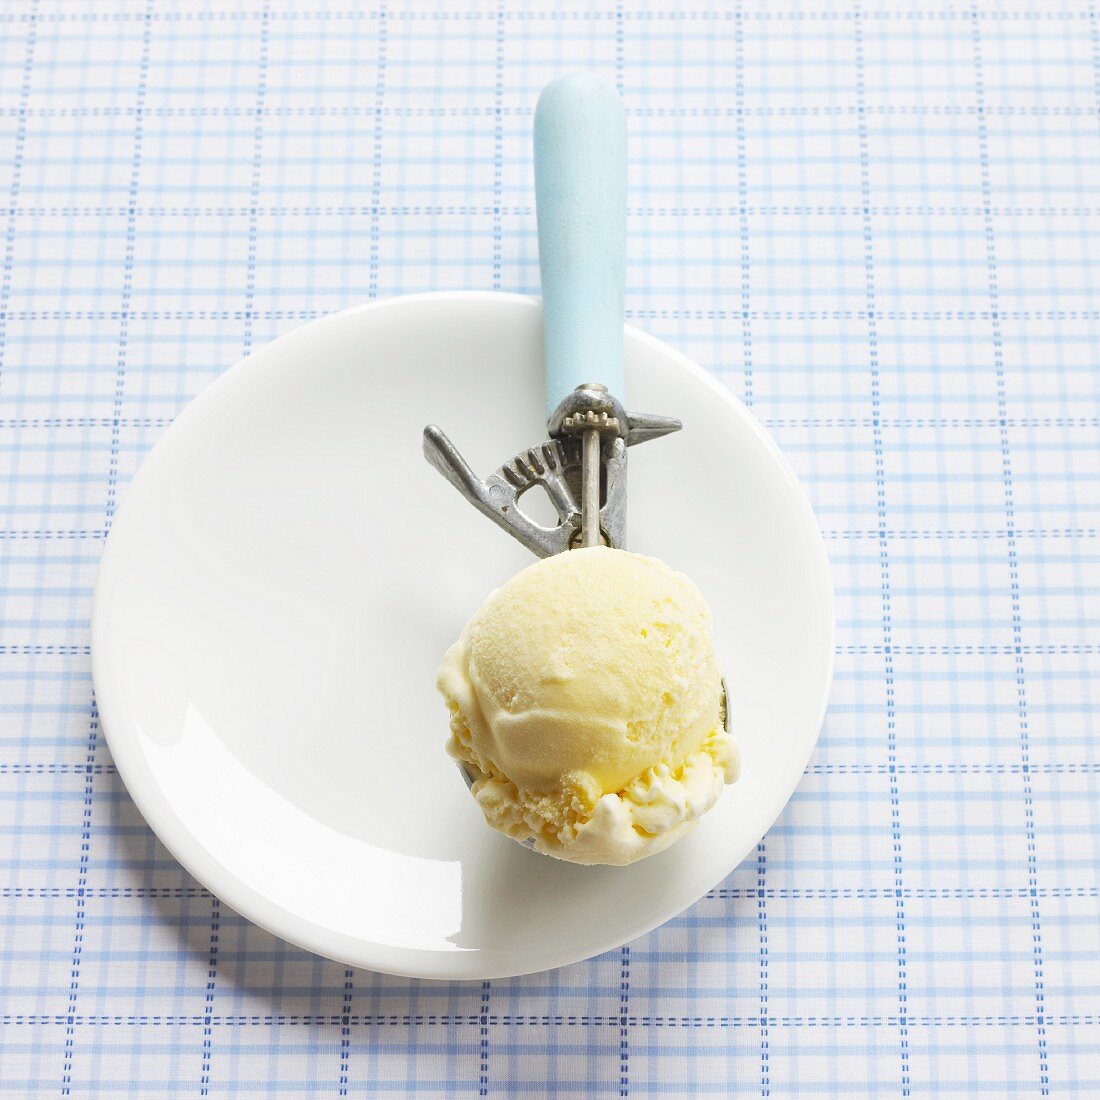 A scoop of lemon ice cream in an ice cream scoop